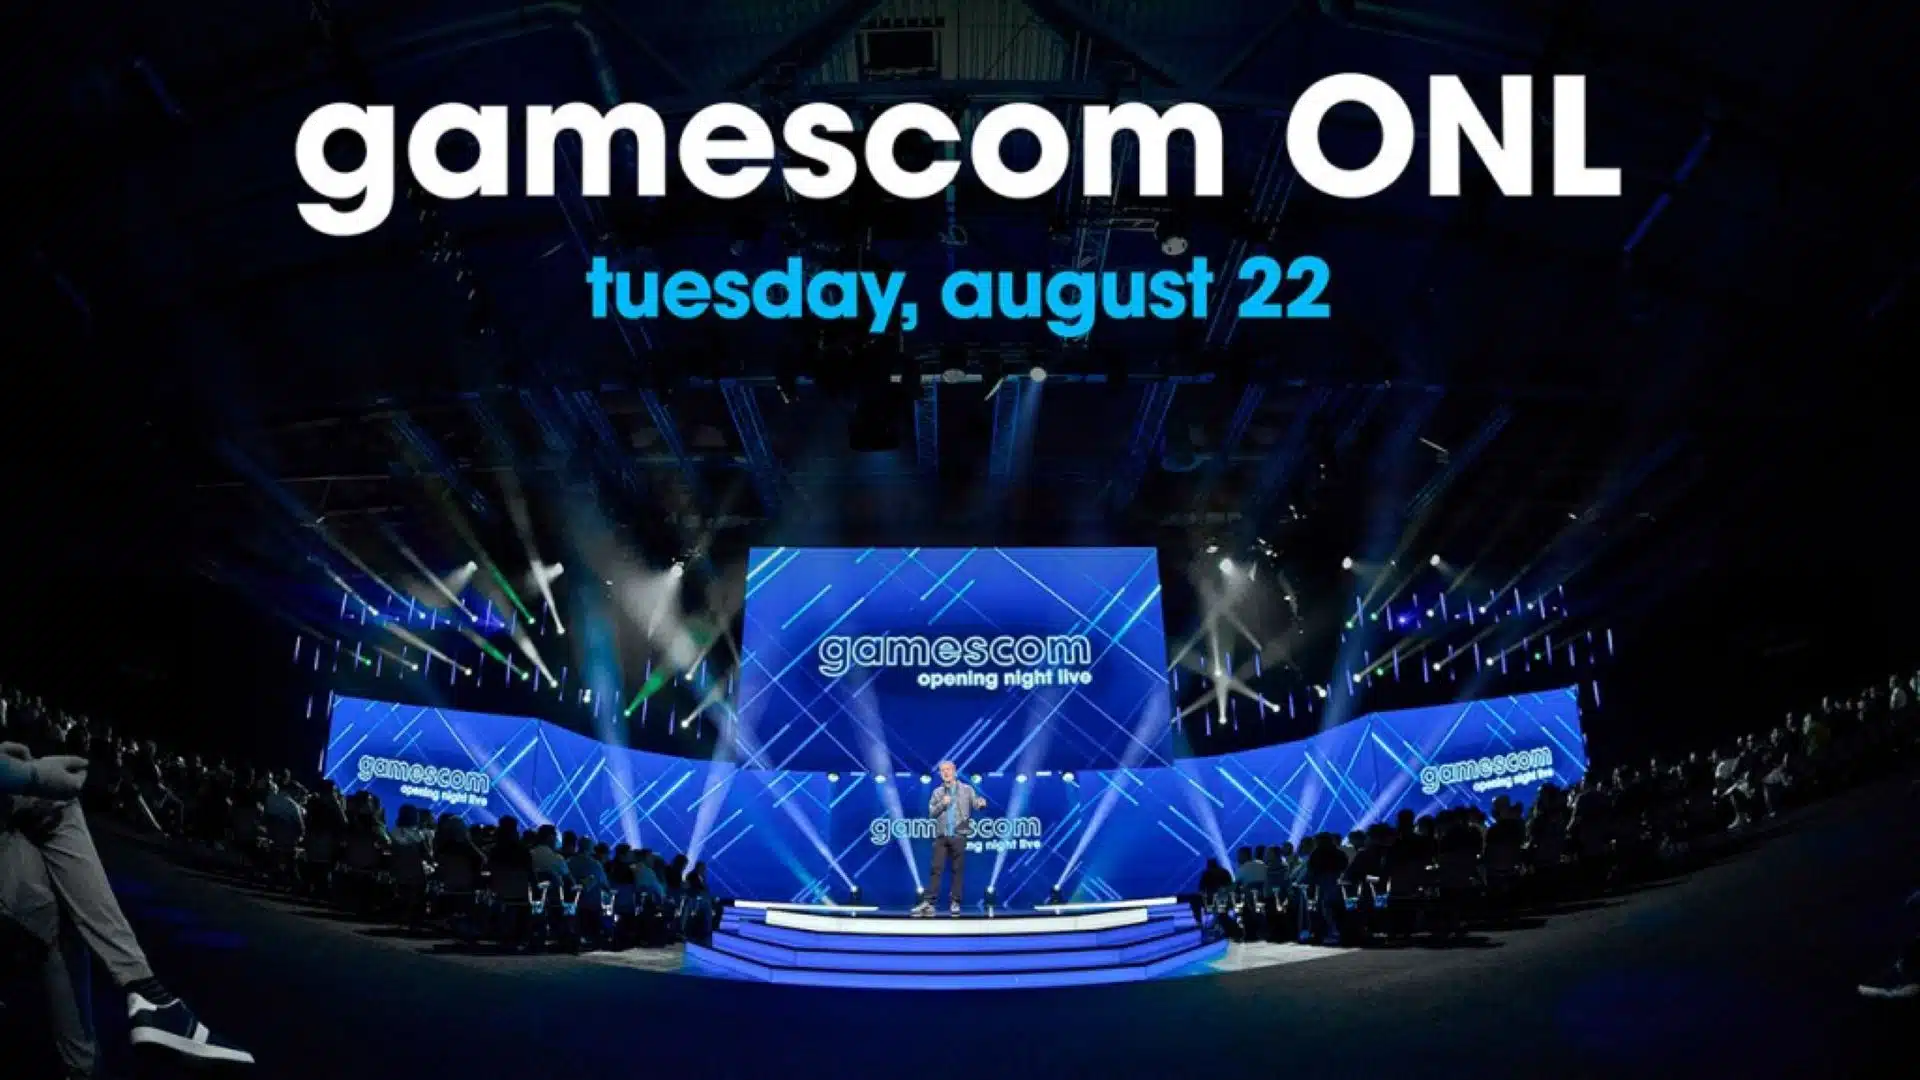 gamescom opening night live